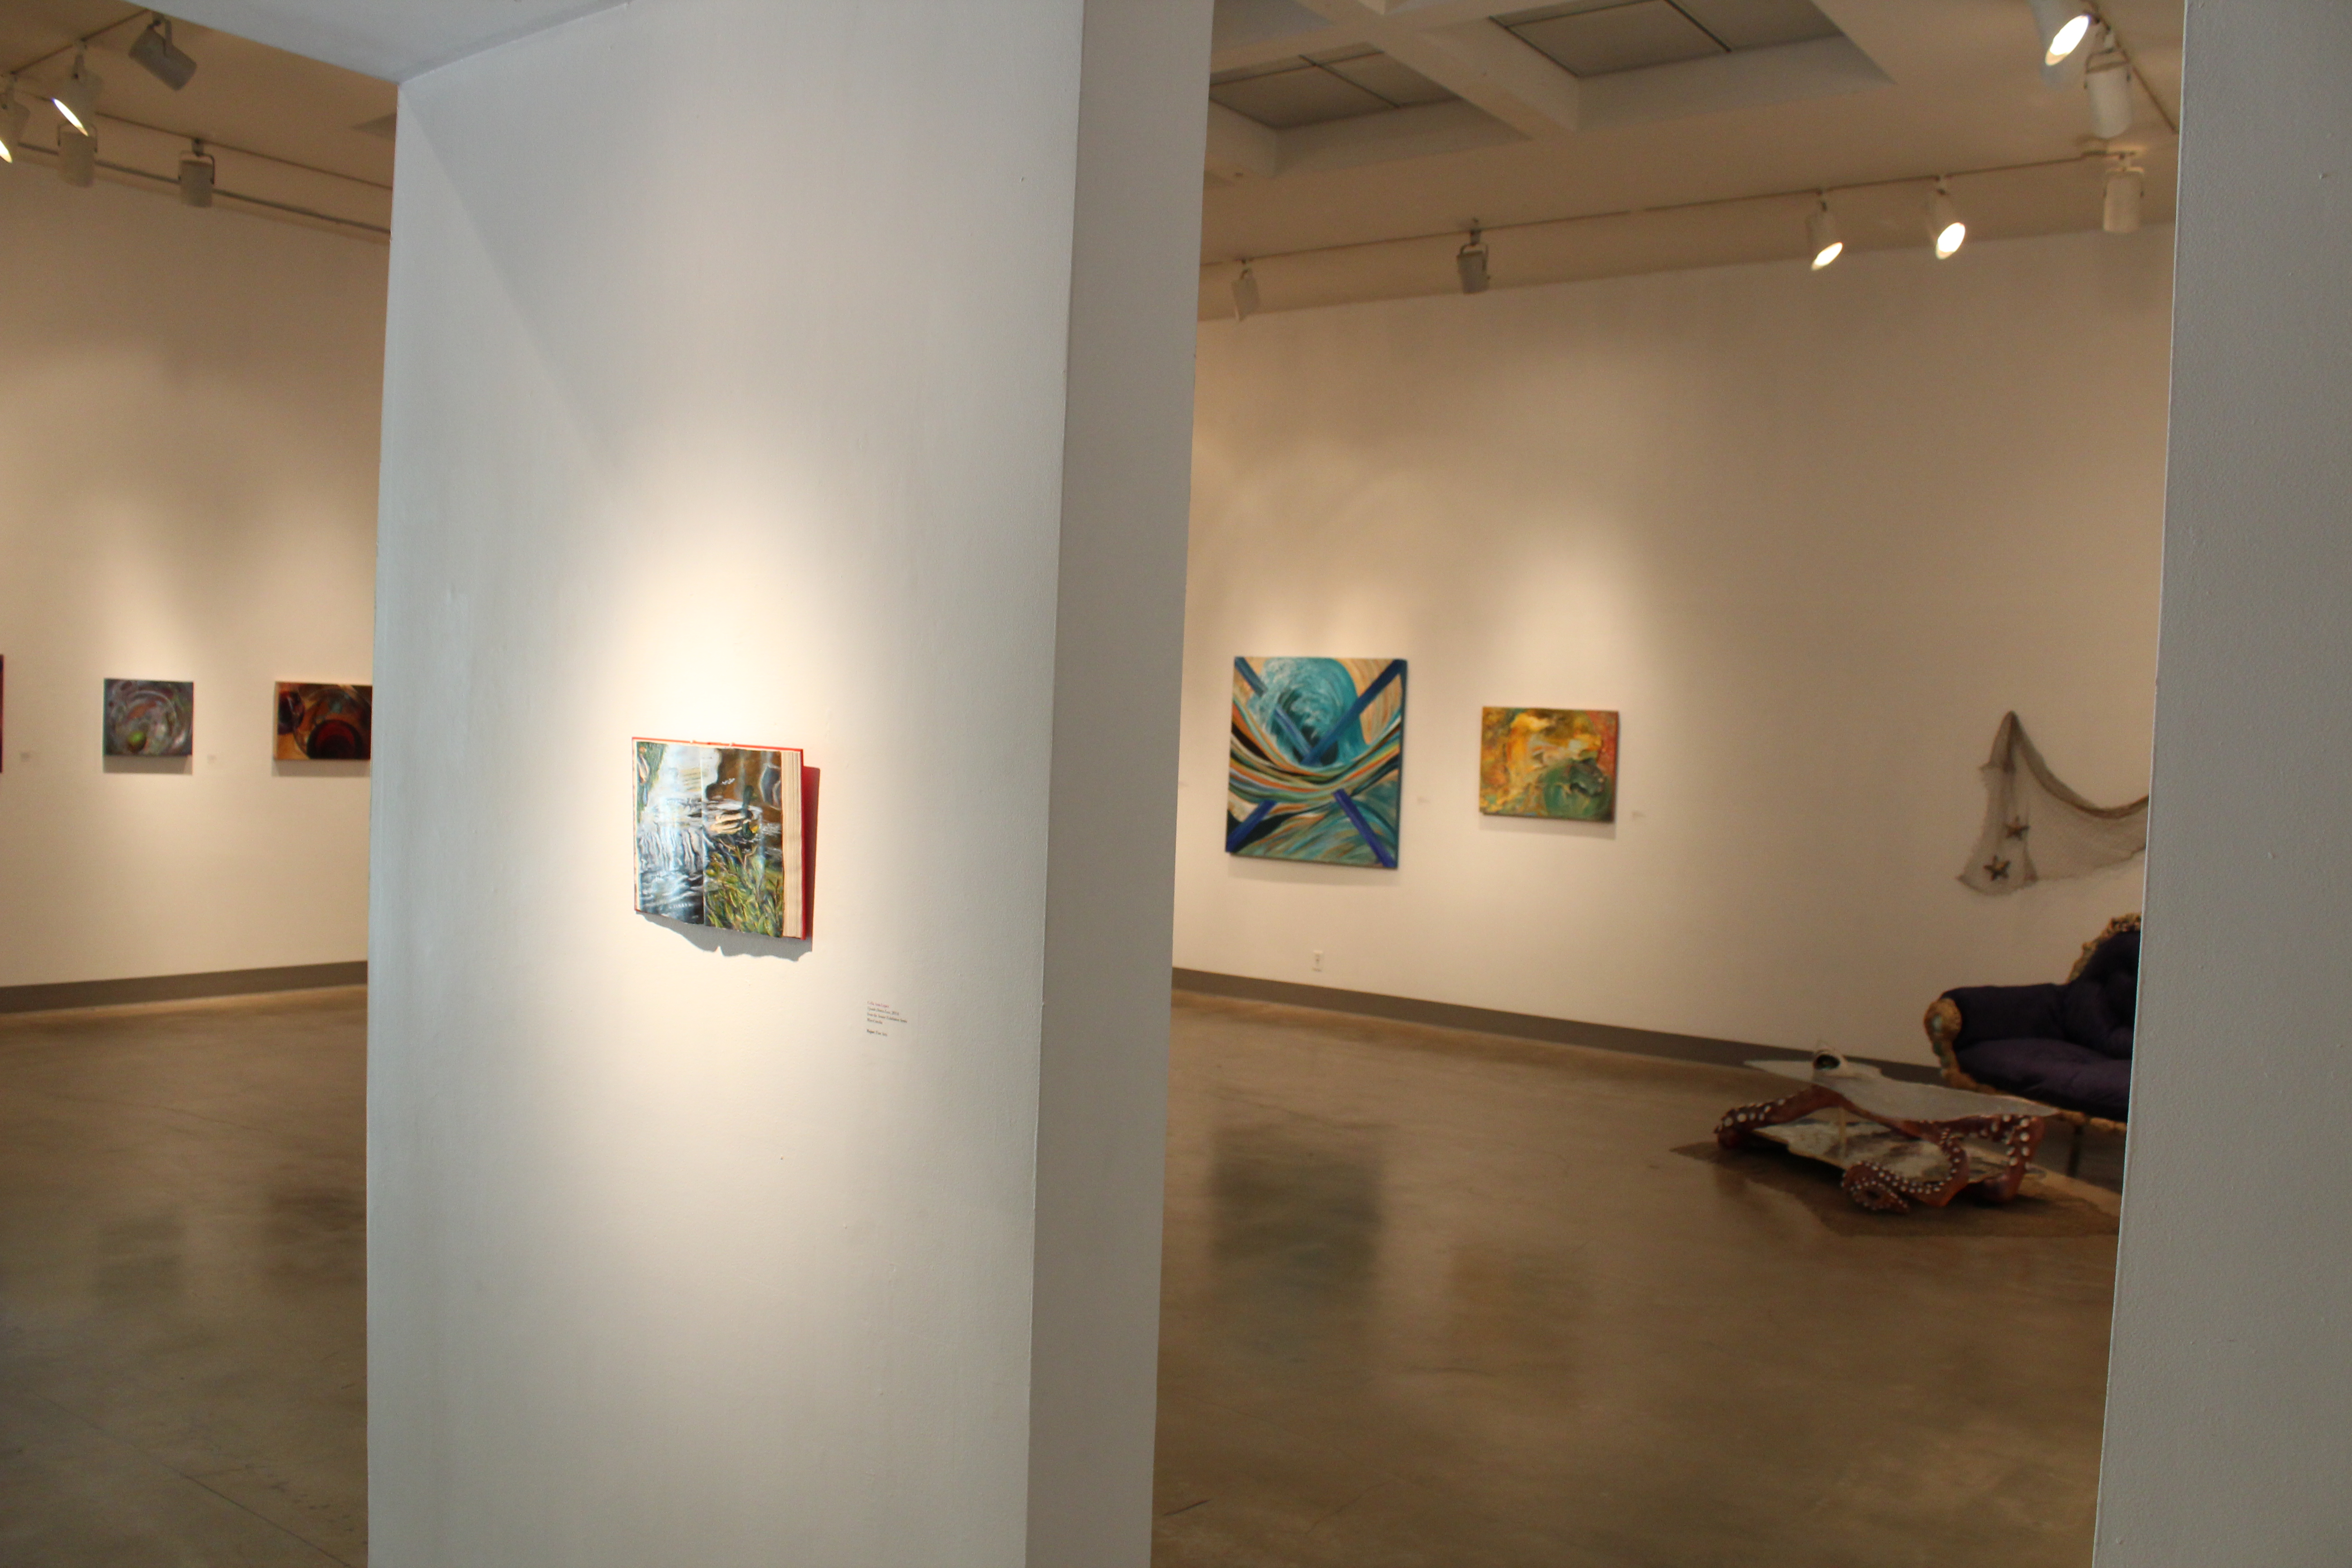 Installation View, Corridor of Gallery, Polykroma 2014 Exhibition, May. 19, 2014 to Jun. 15, 2014.